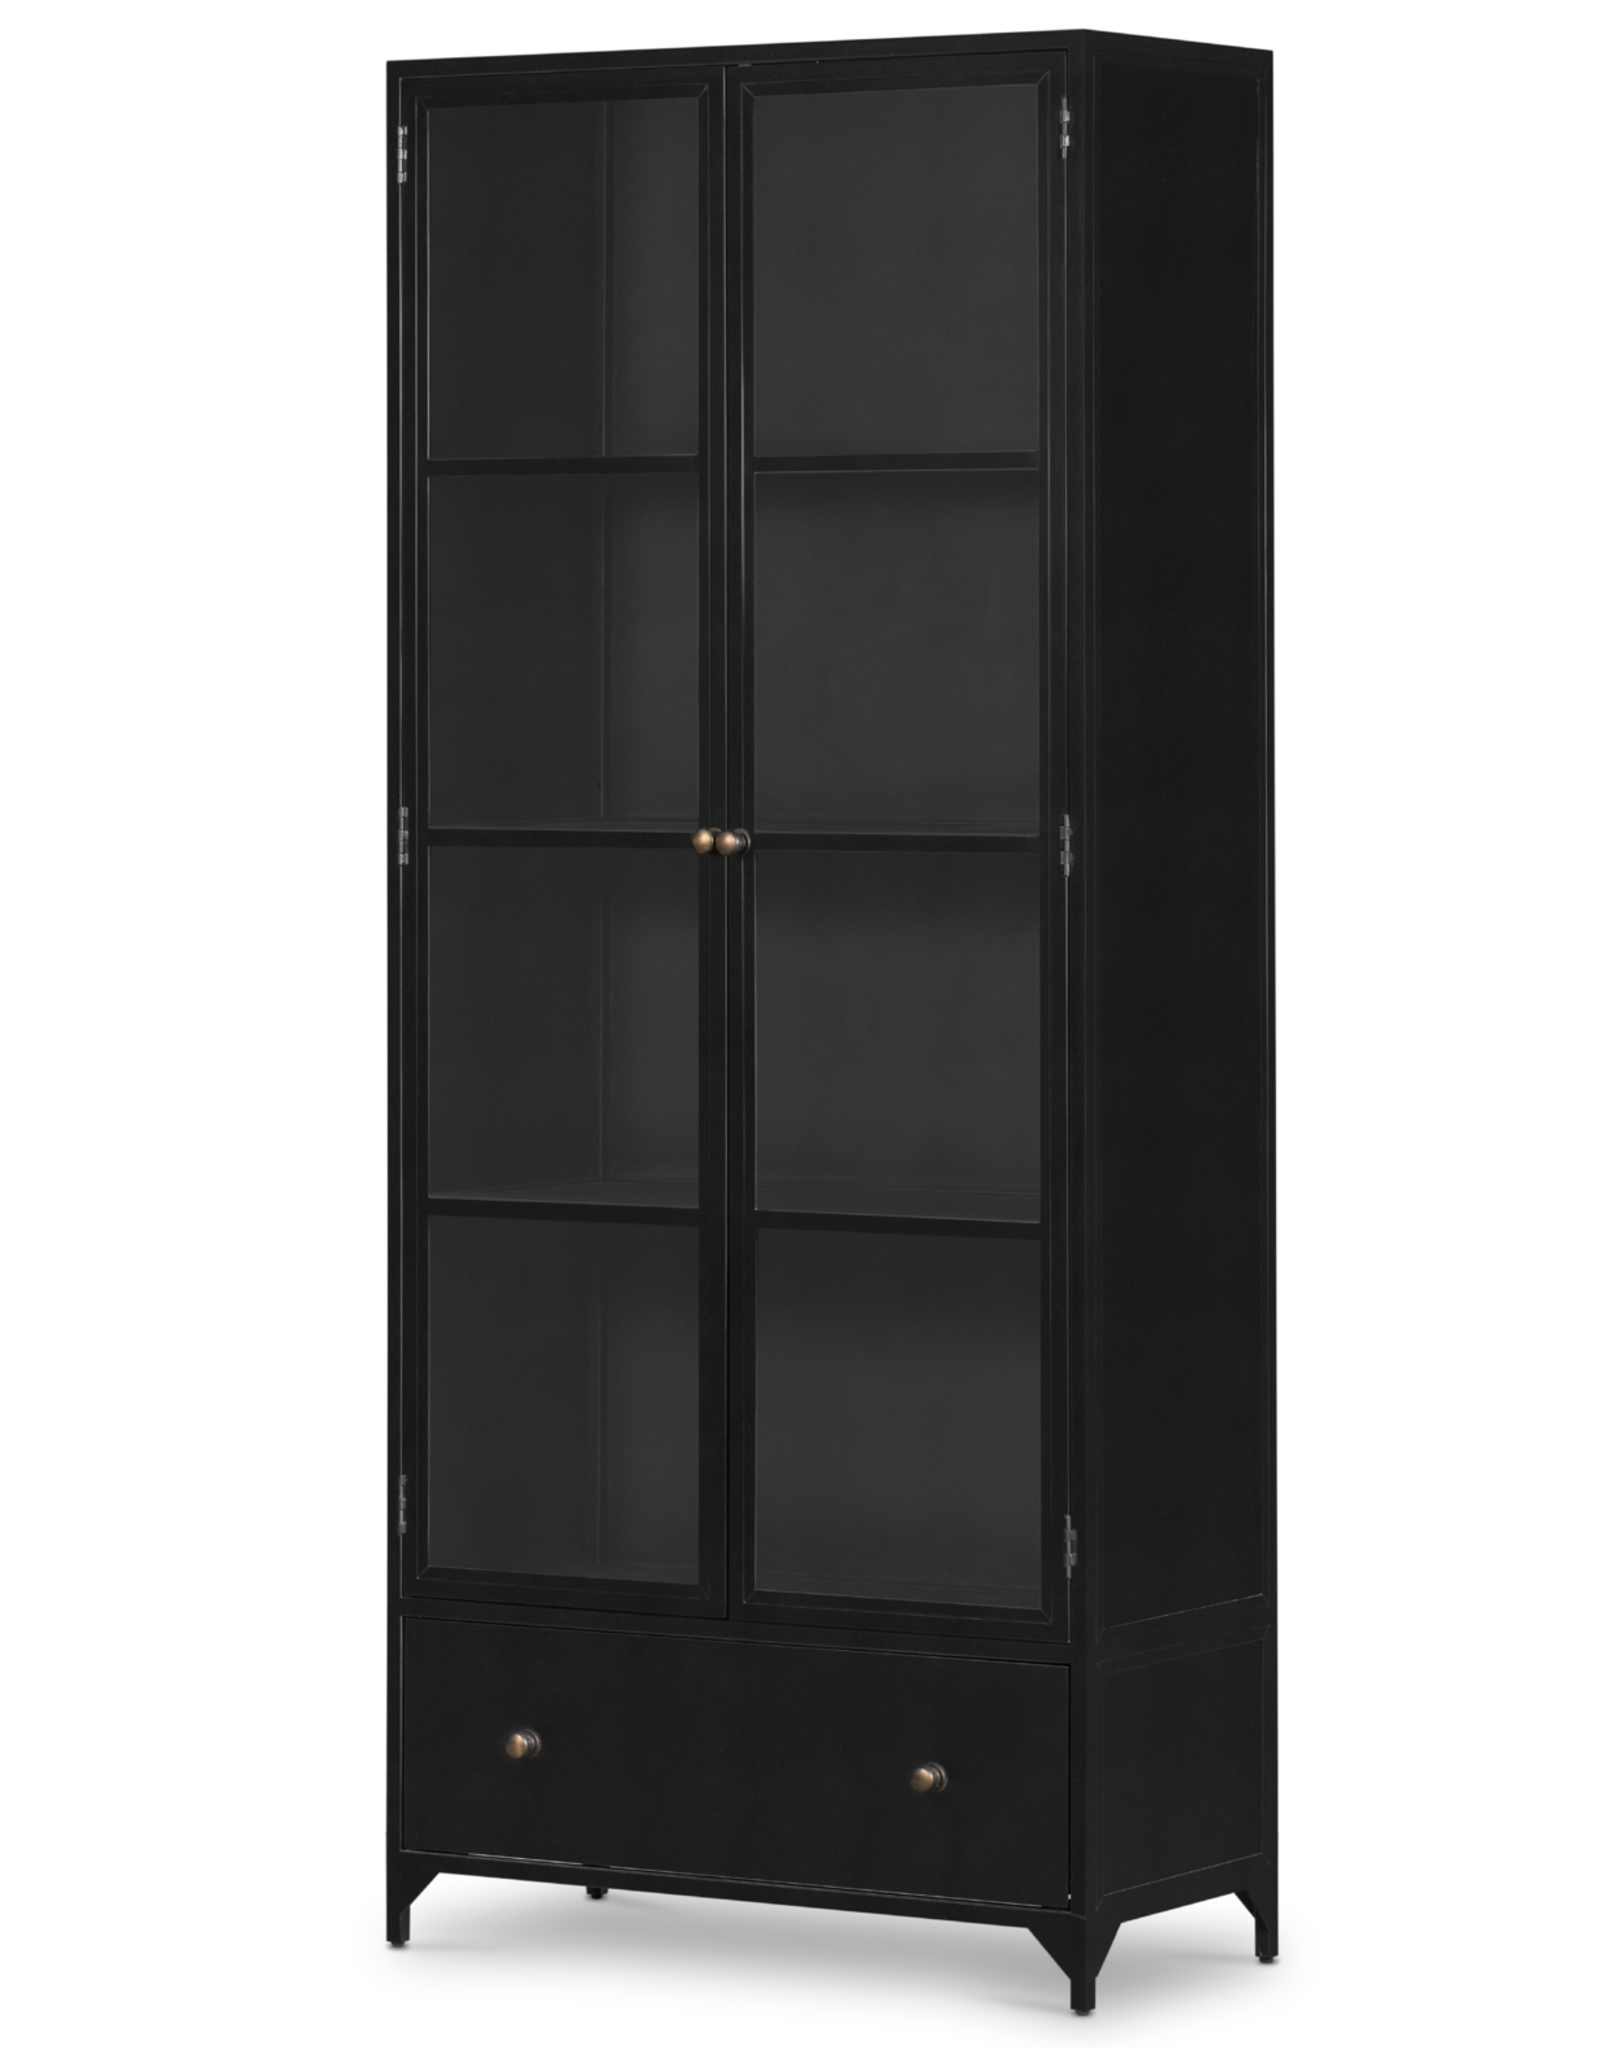 Shadow Box Cabinet in Black